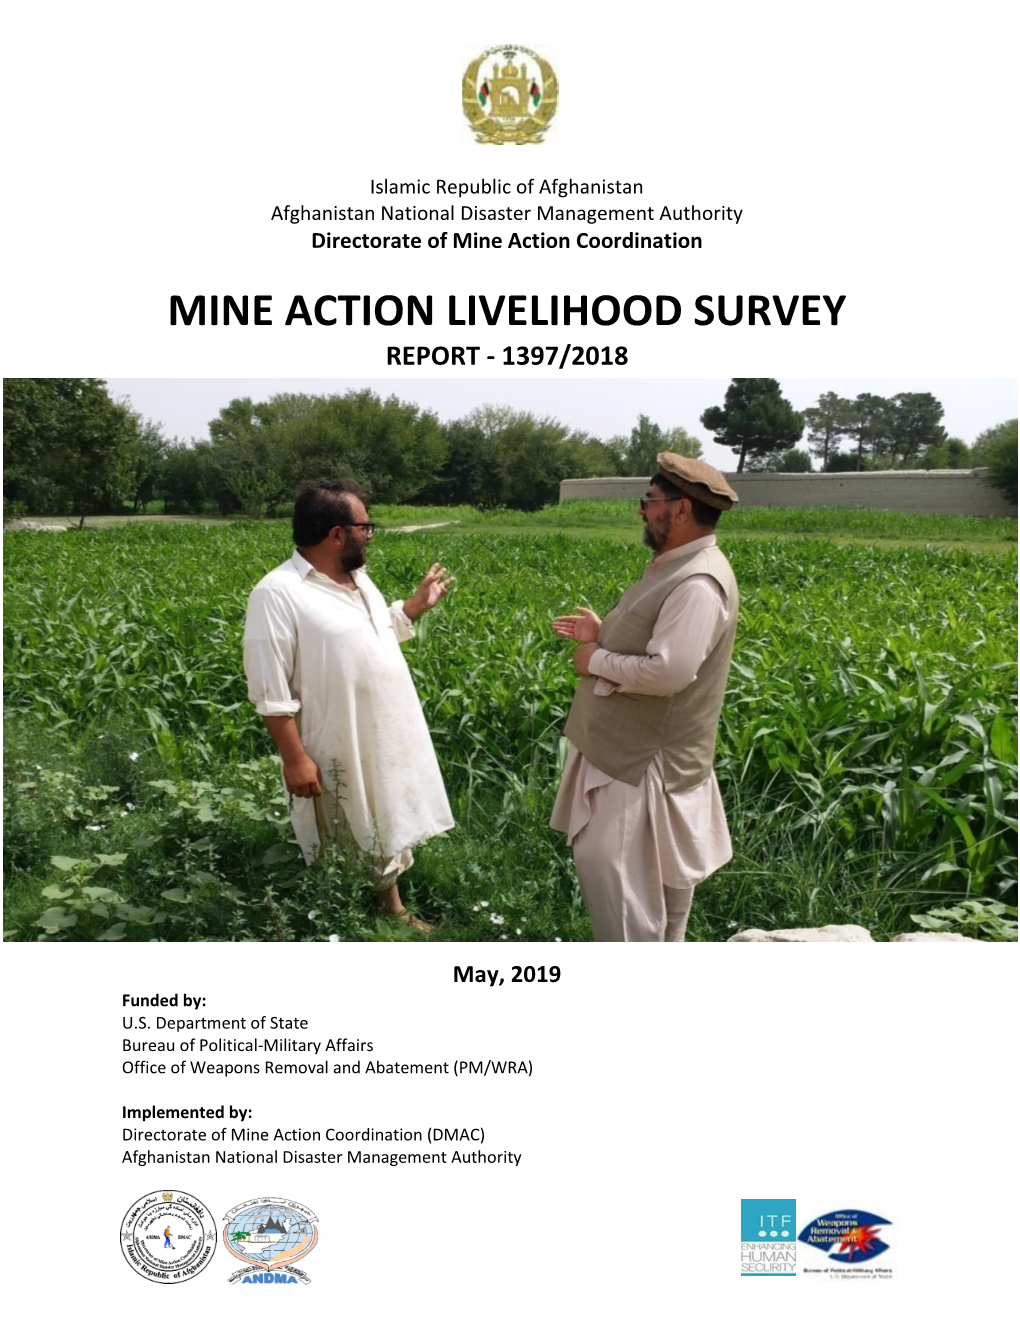 MAPA Landmine & Livelihood Survey-REPORT 1397/2018 English